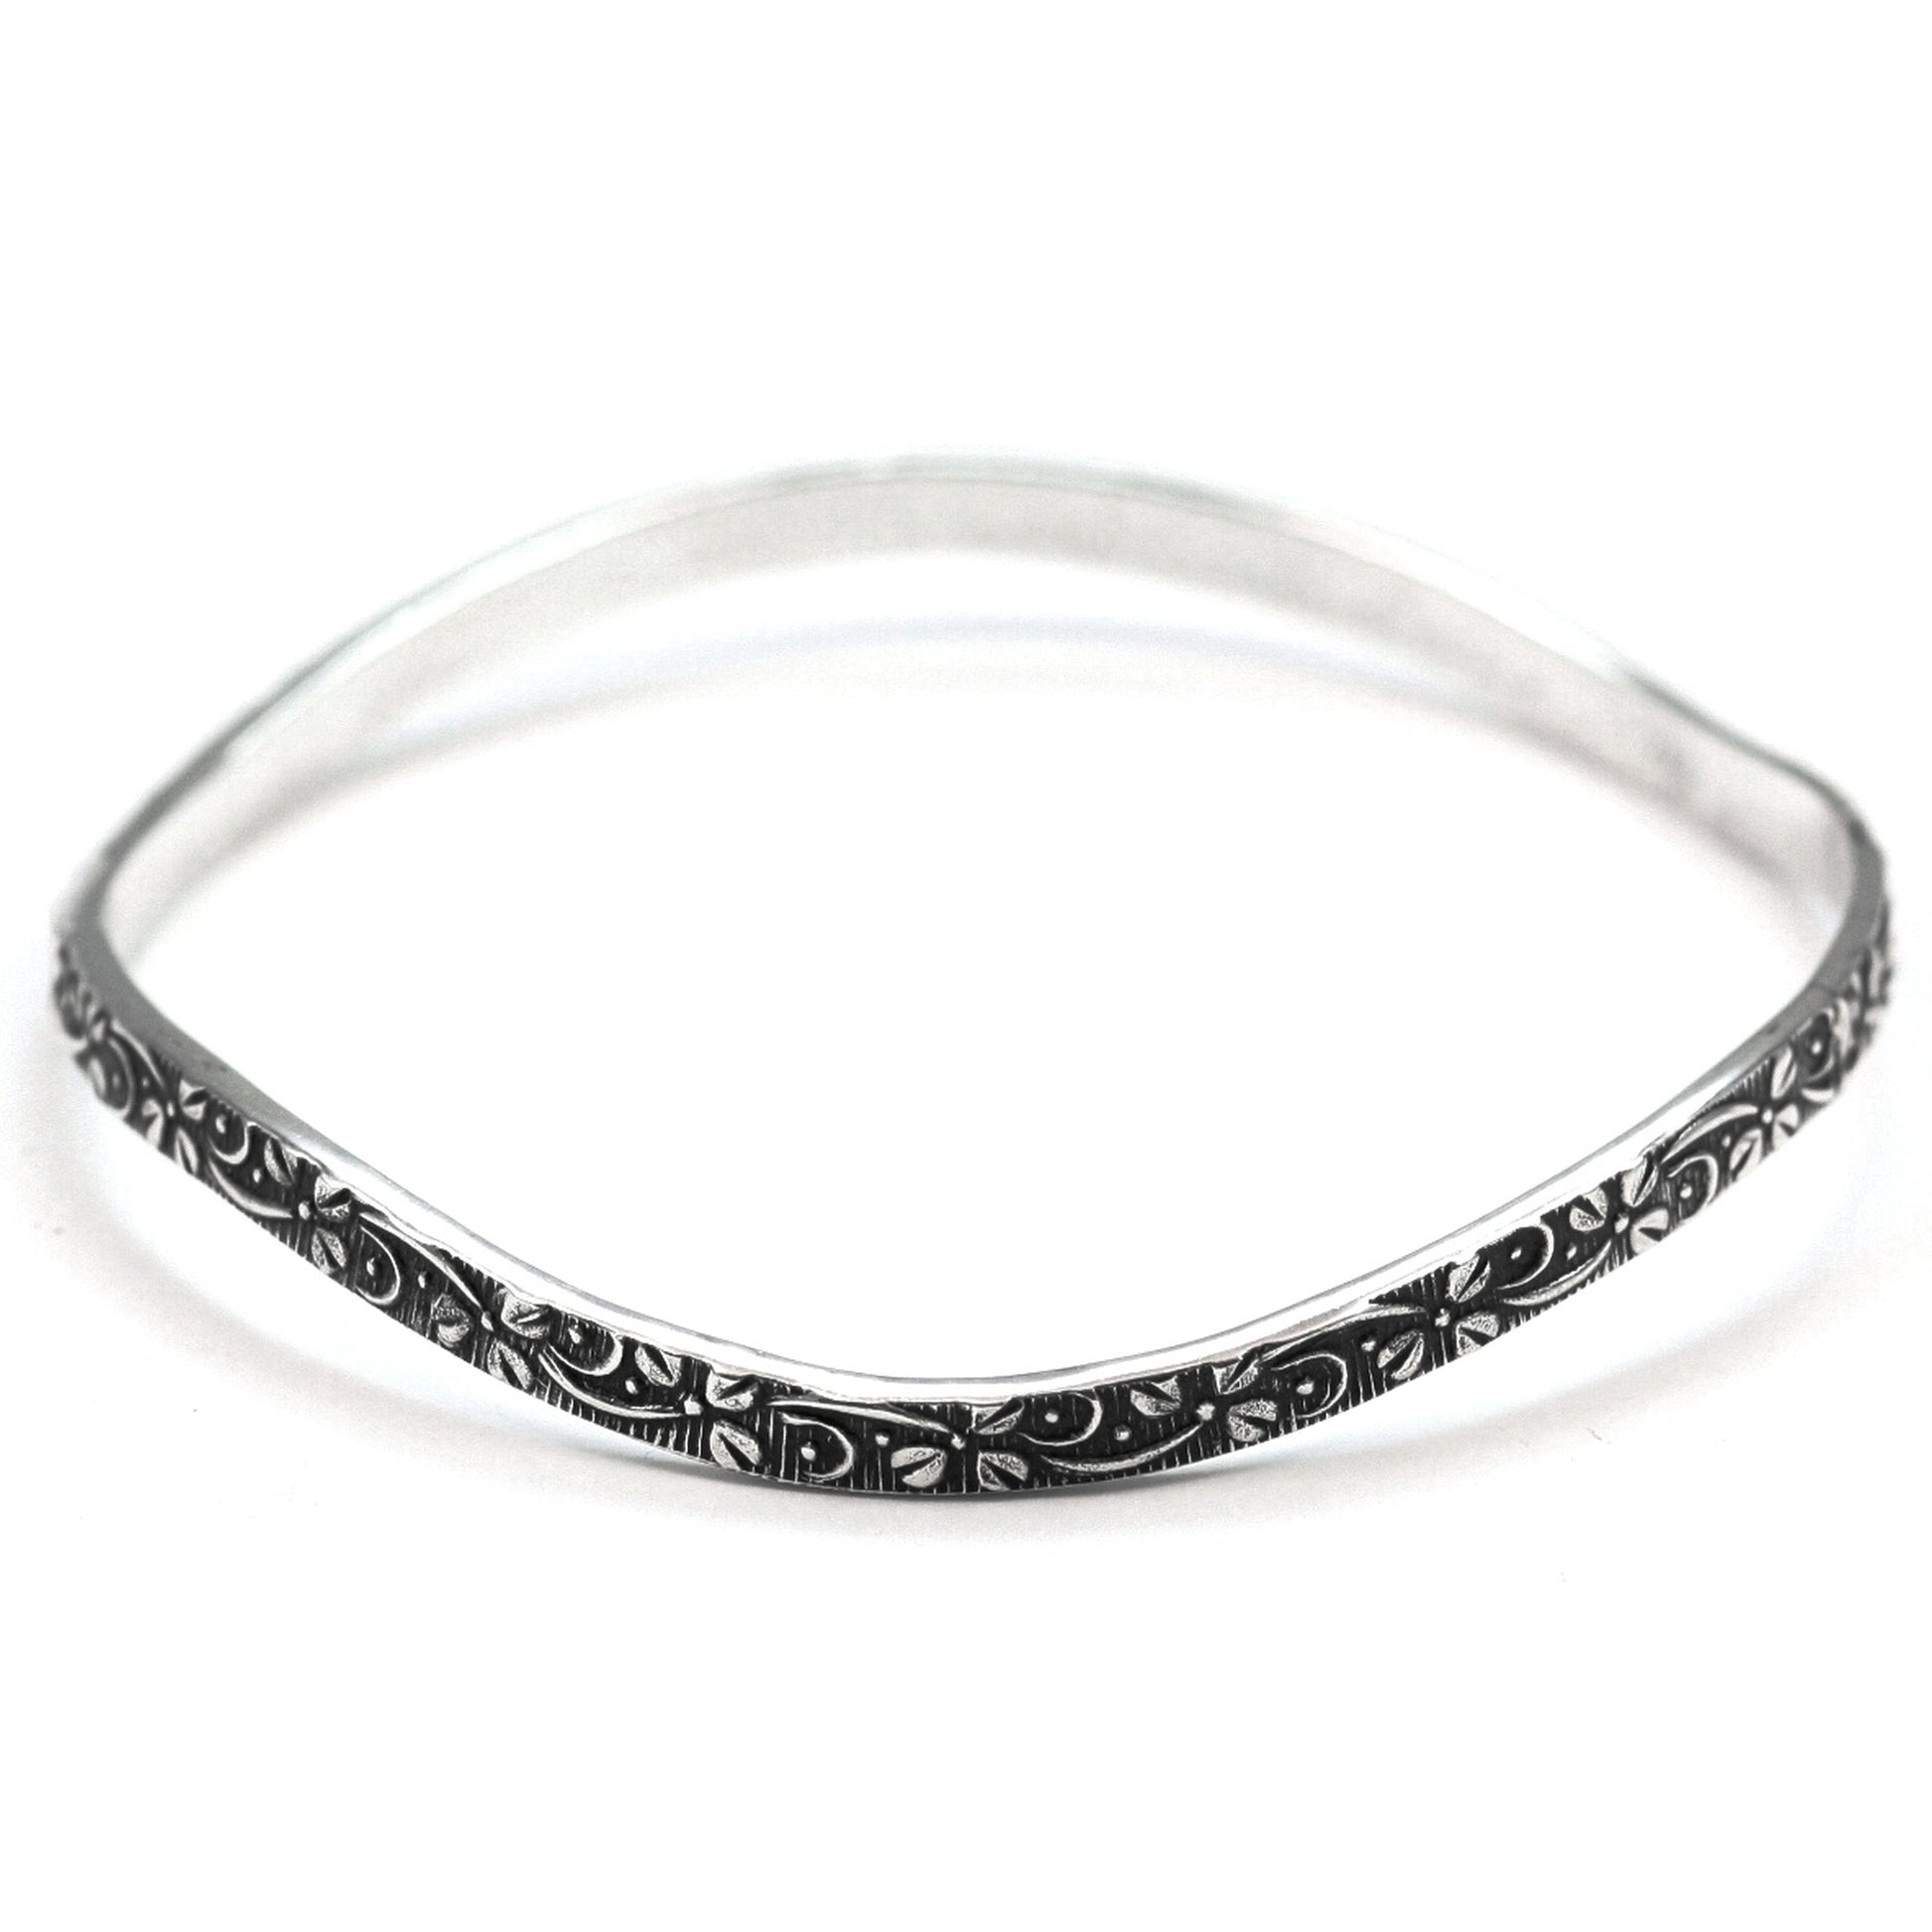 Silver wavy bangle bracelet with floral design motif.